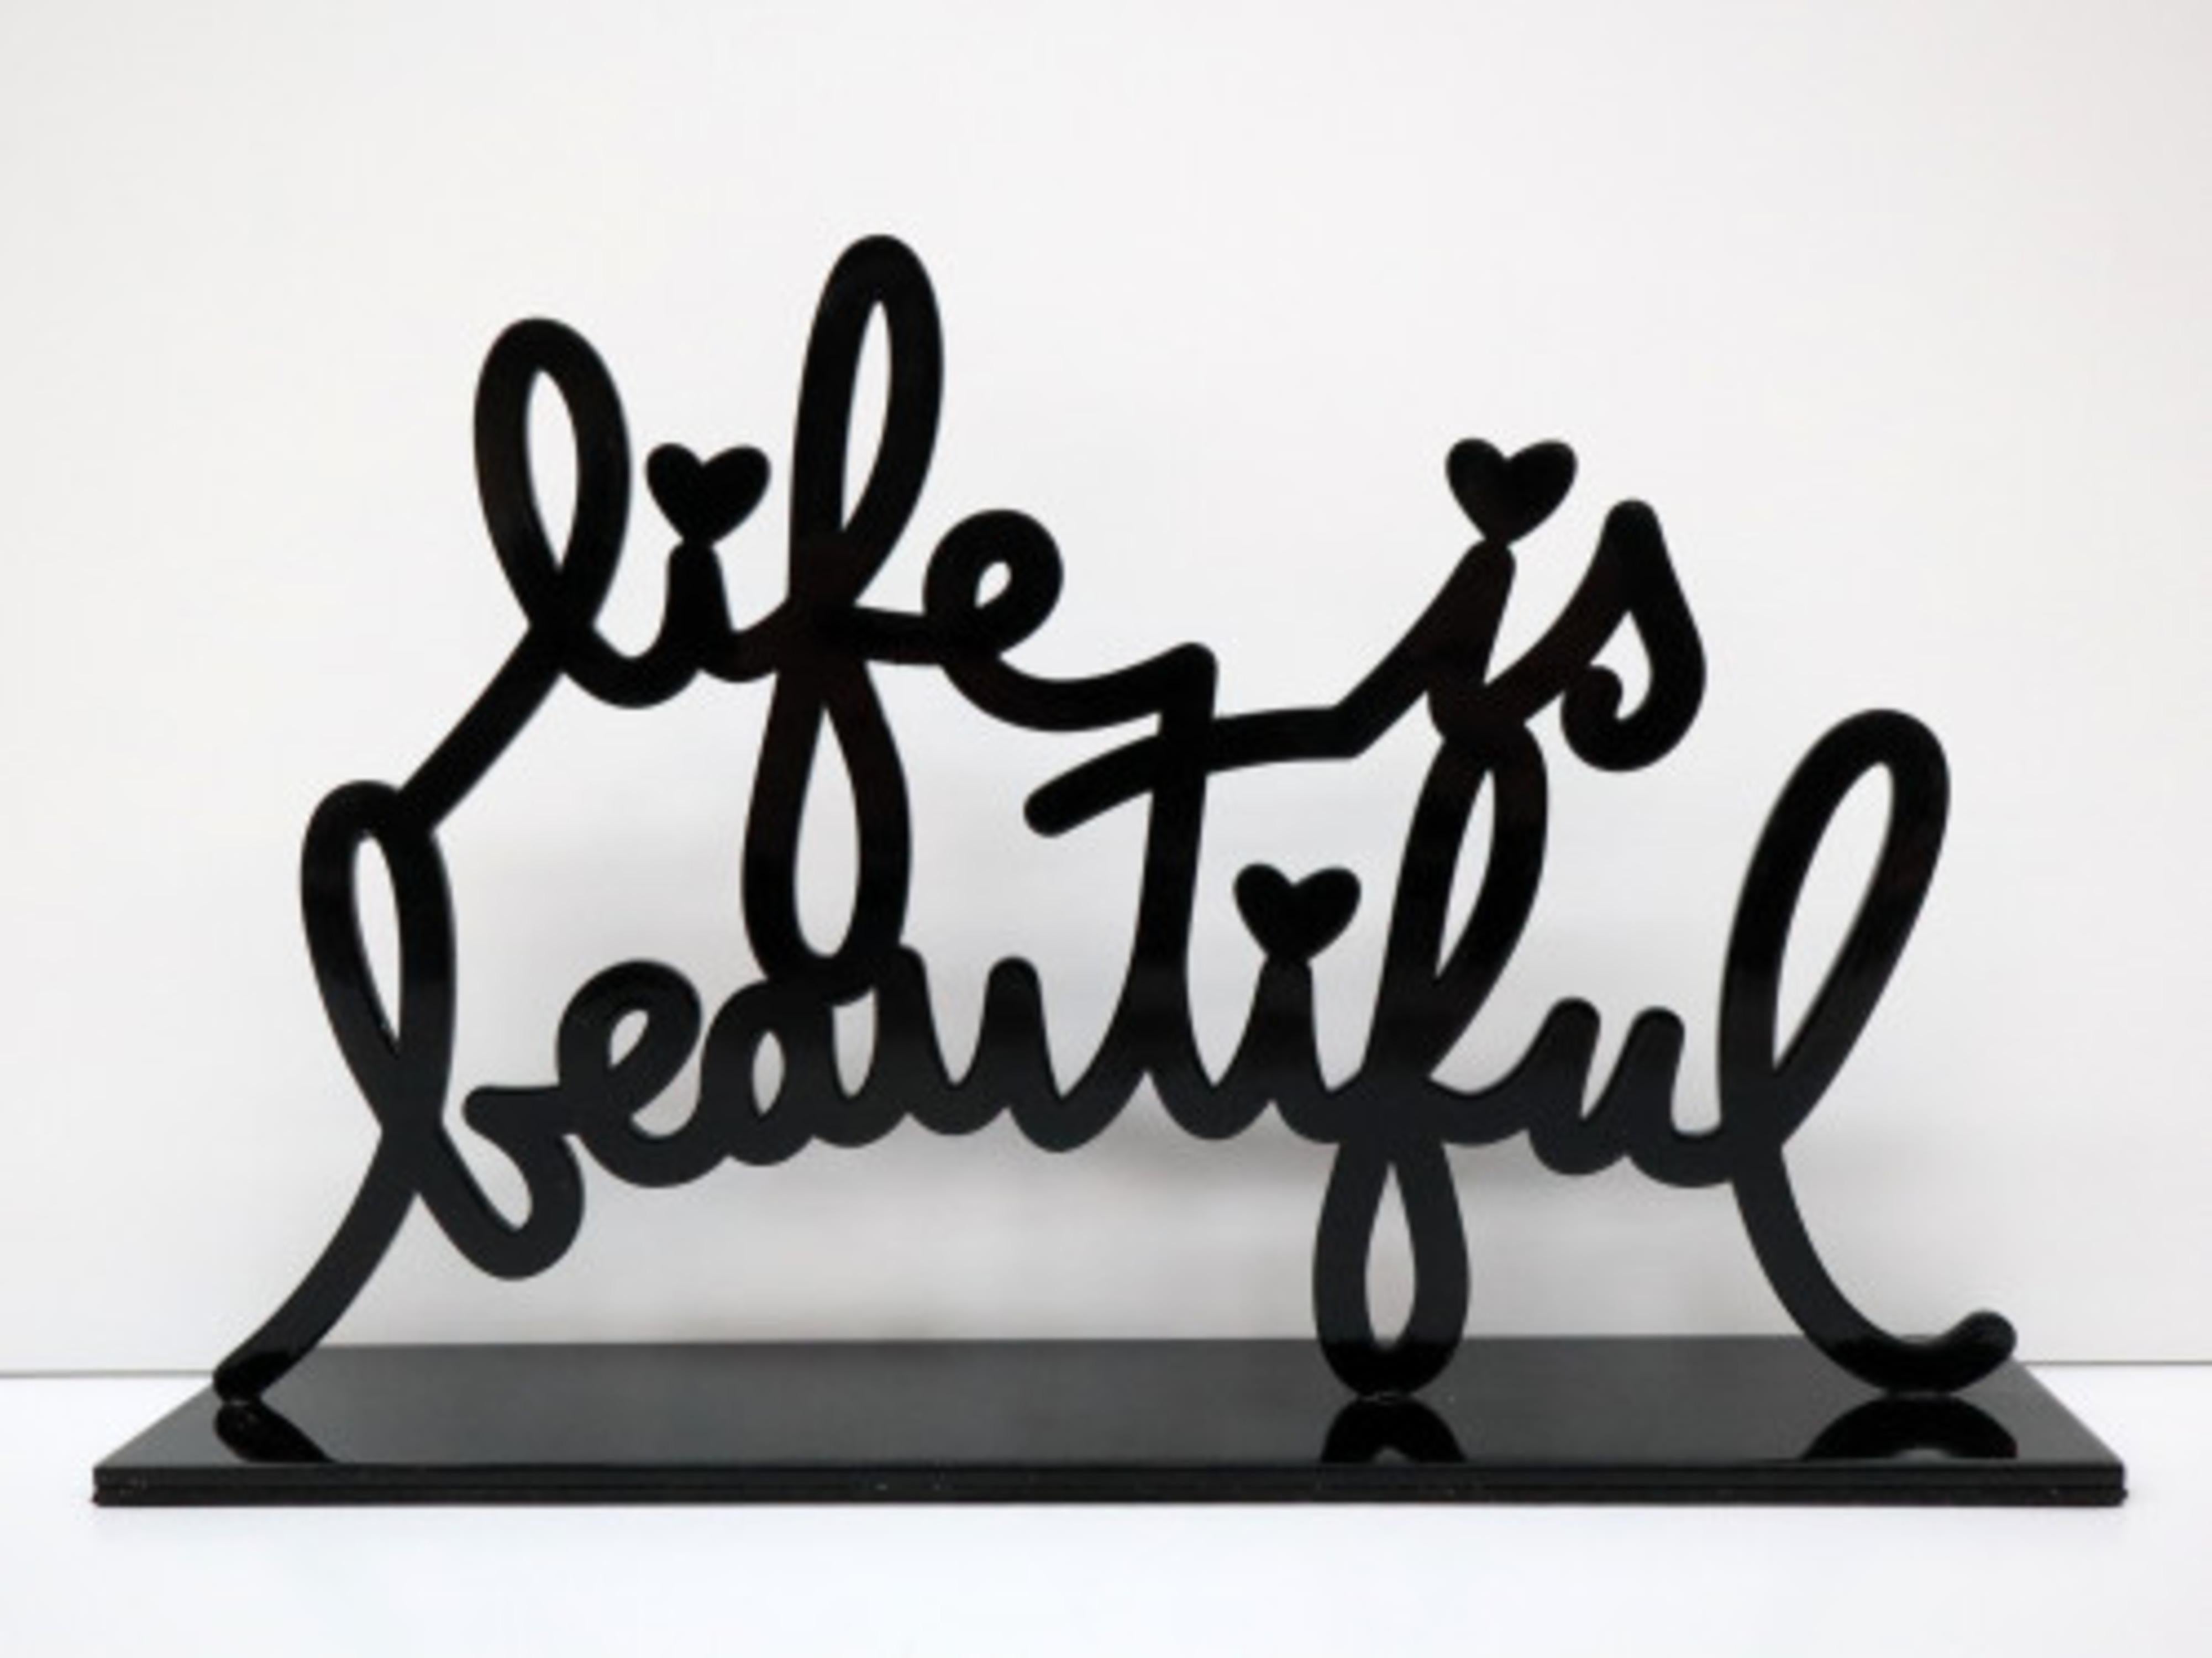 Life is Beautiful (Black) - Sculpture by Mr. Brainwash